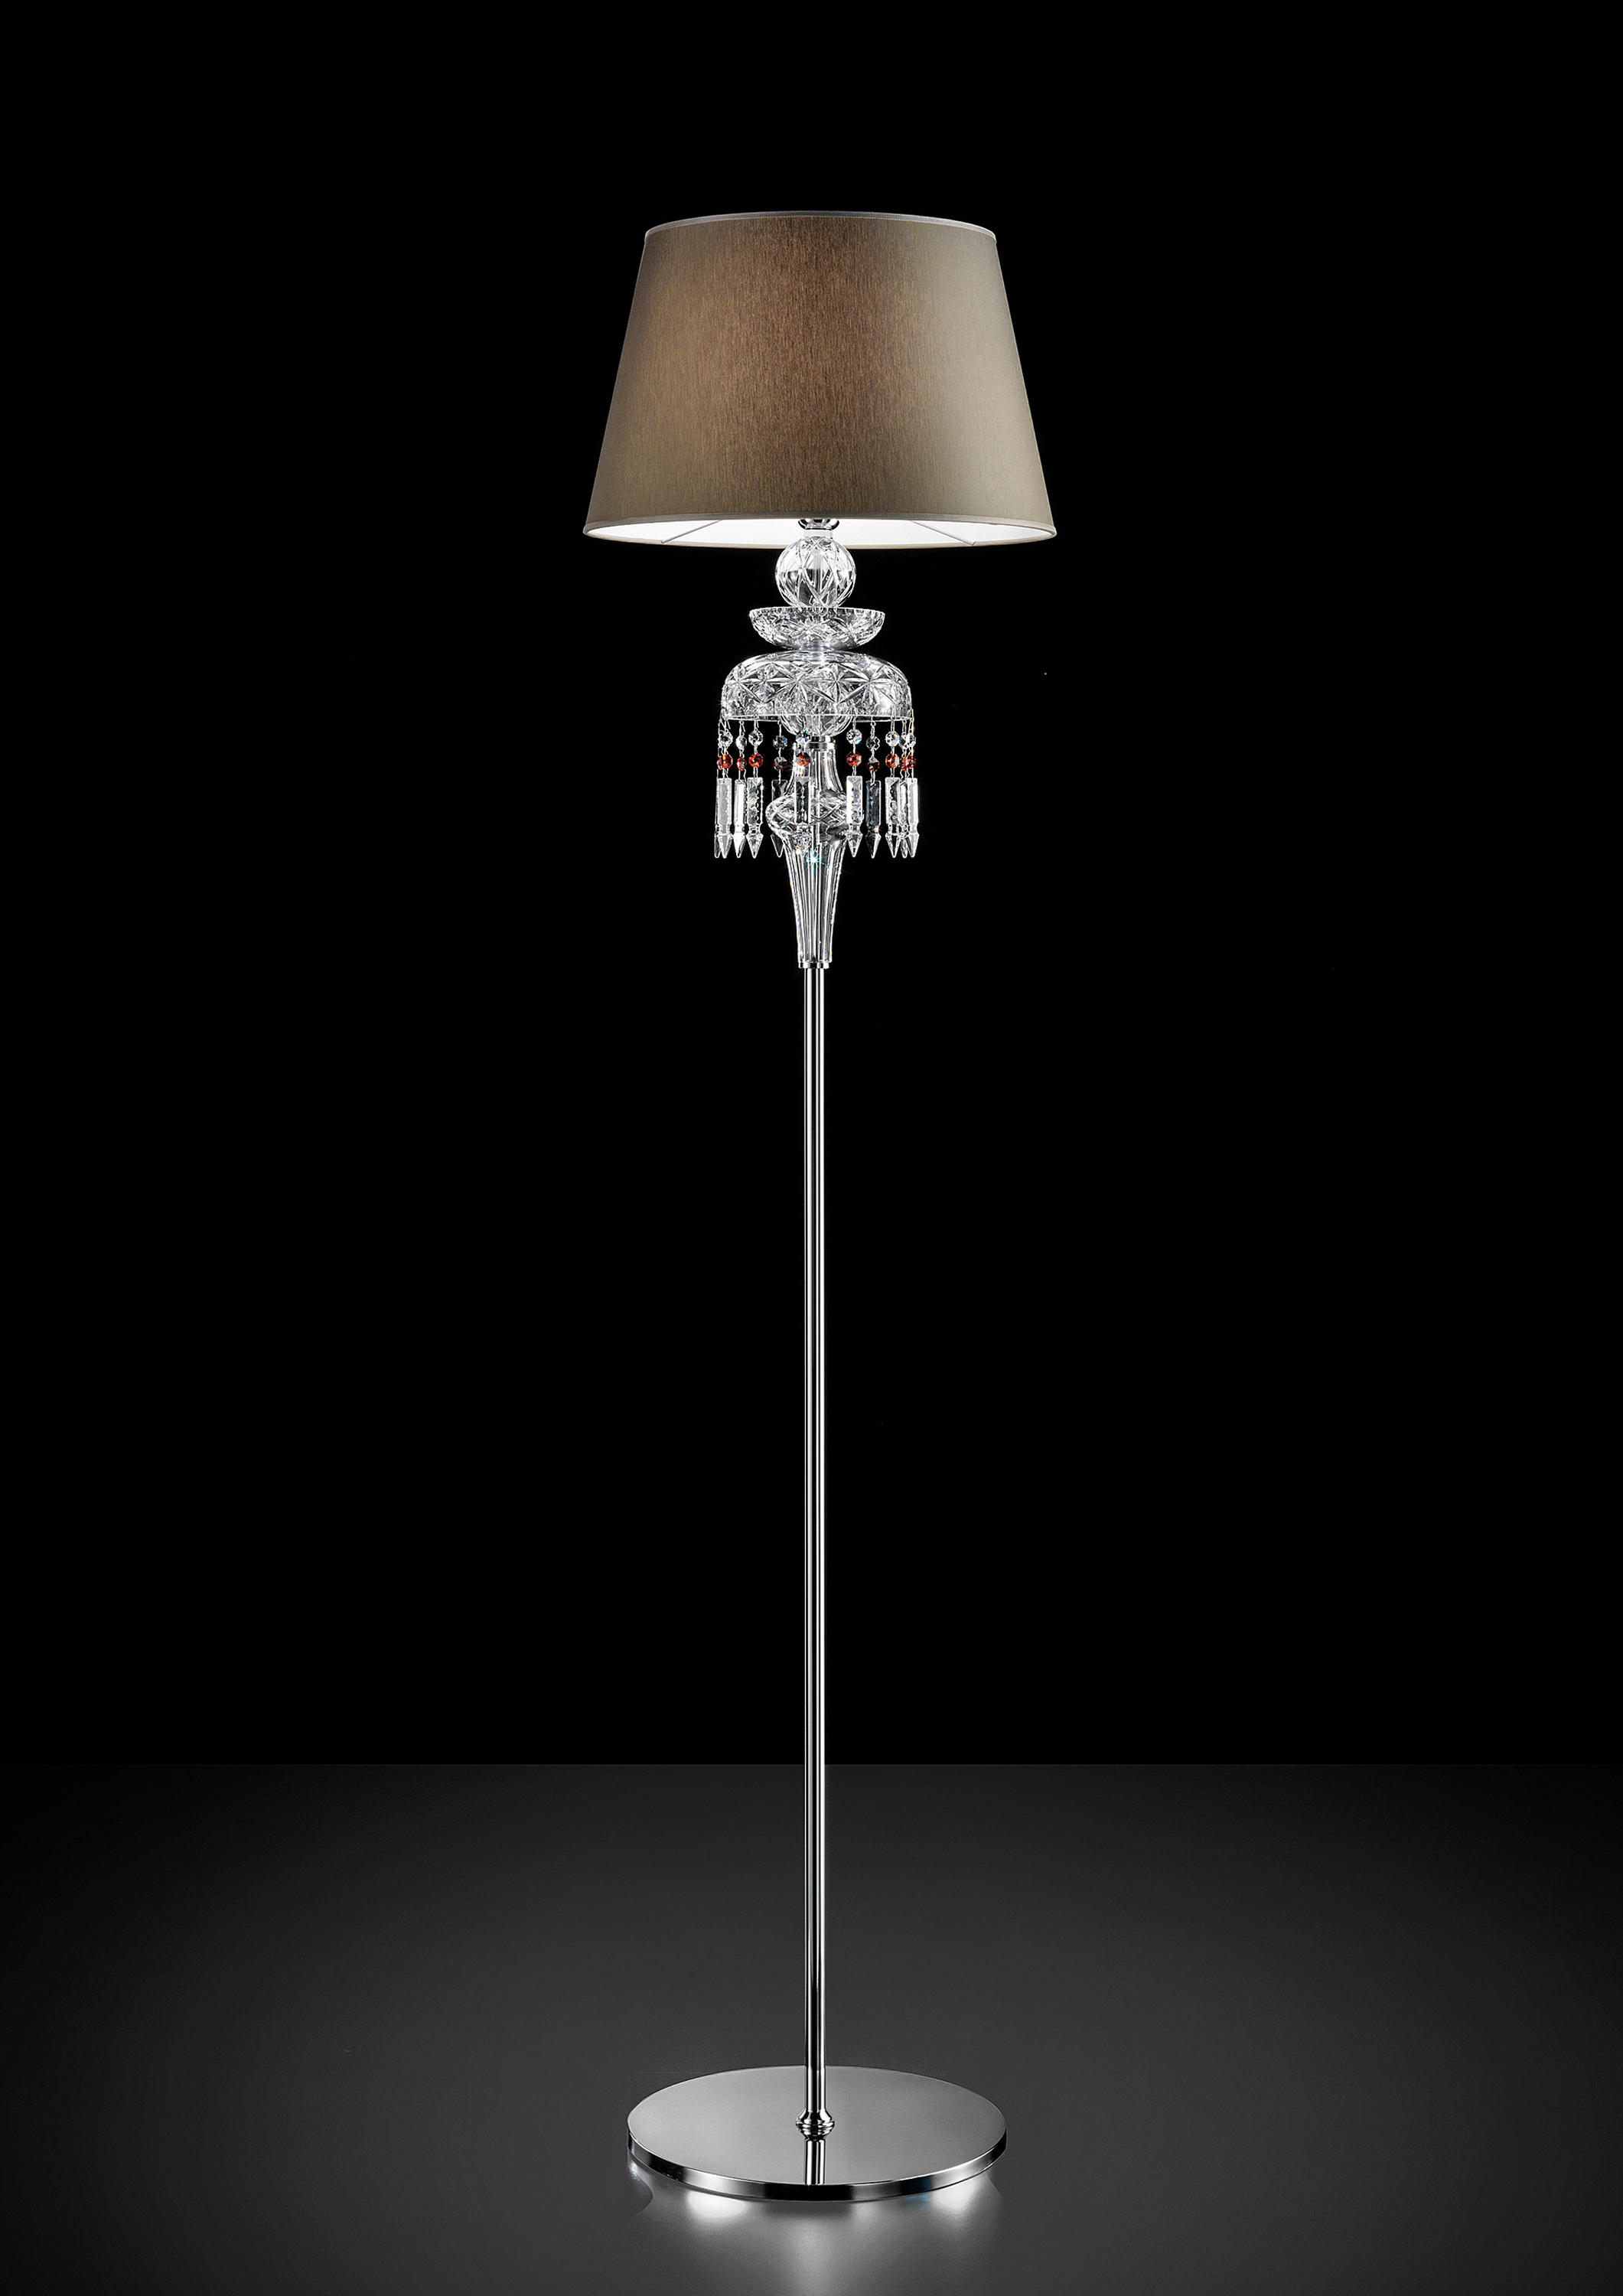 CHANEL FLOOR LAMP & designer furniture